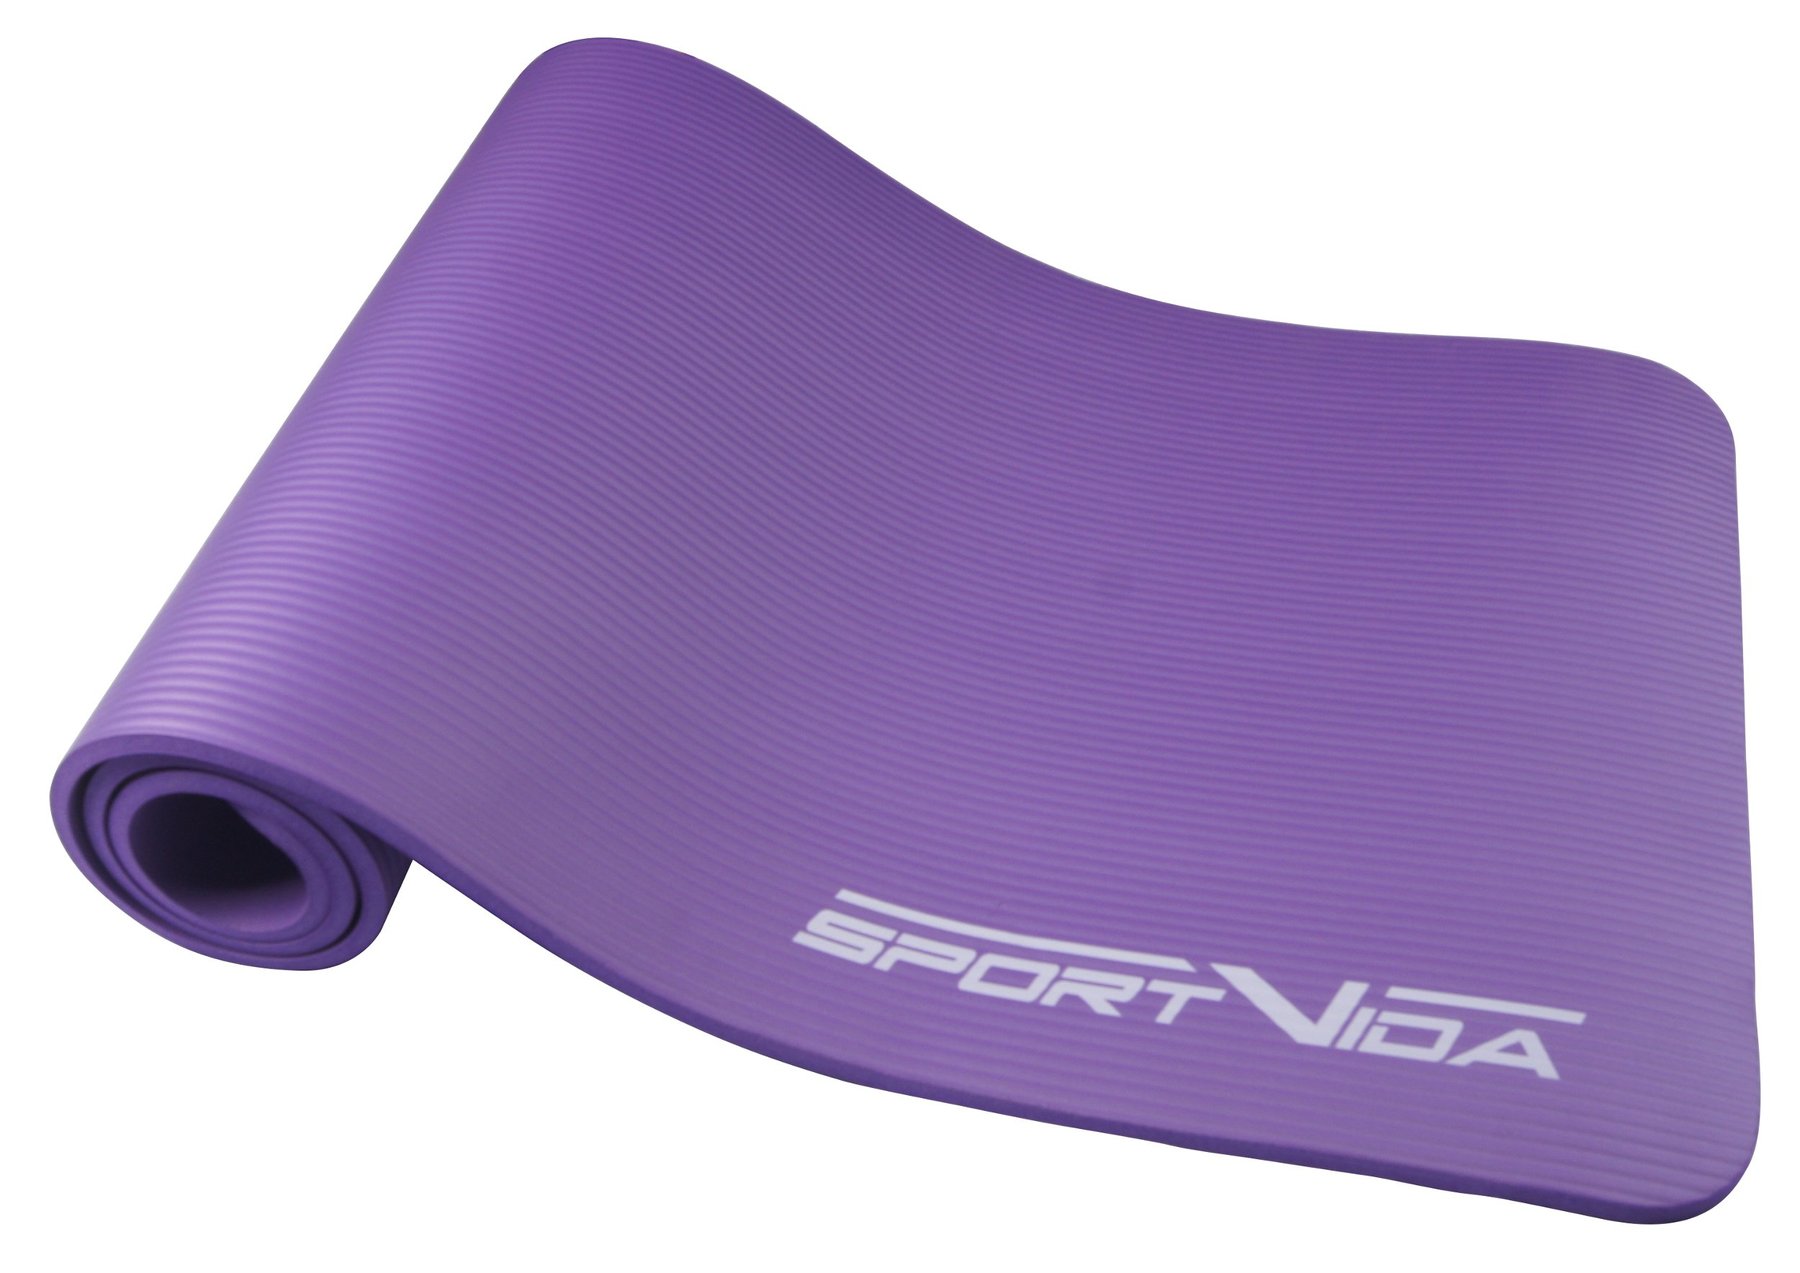 Килимок (мат) спортивний SportVida NBR 180 x 60 x 1 см для йоги та фітнесу SV-HK0068 Violet